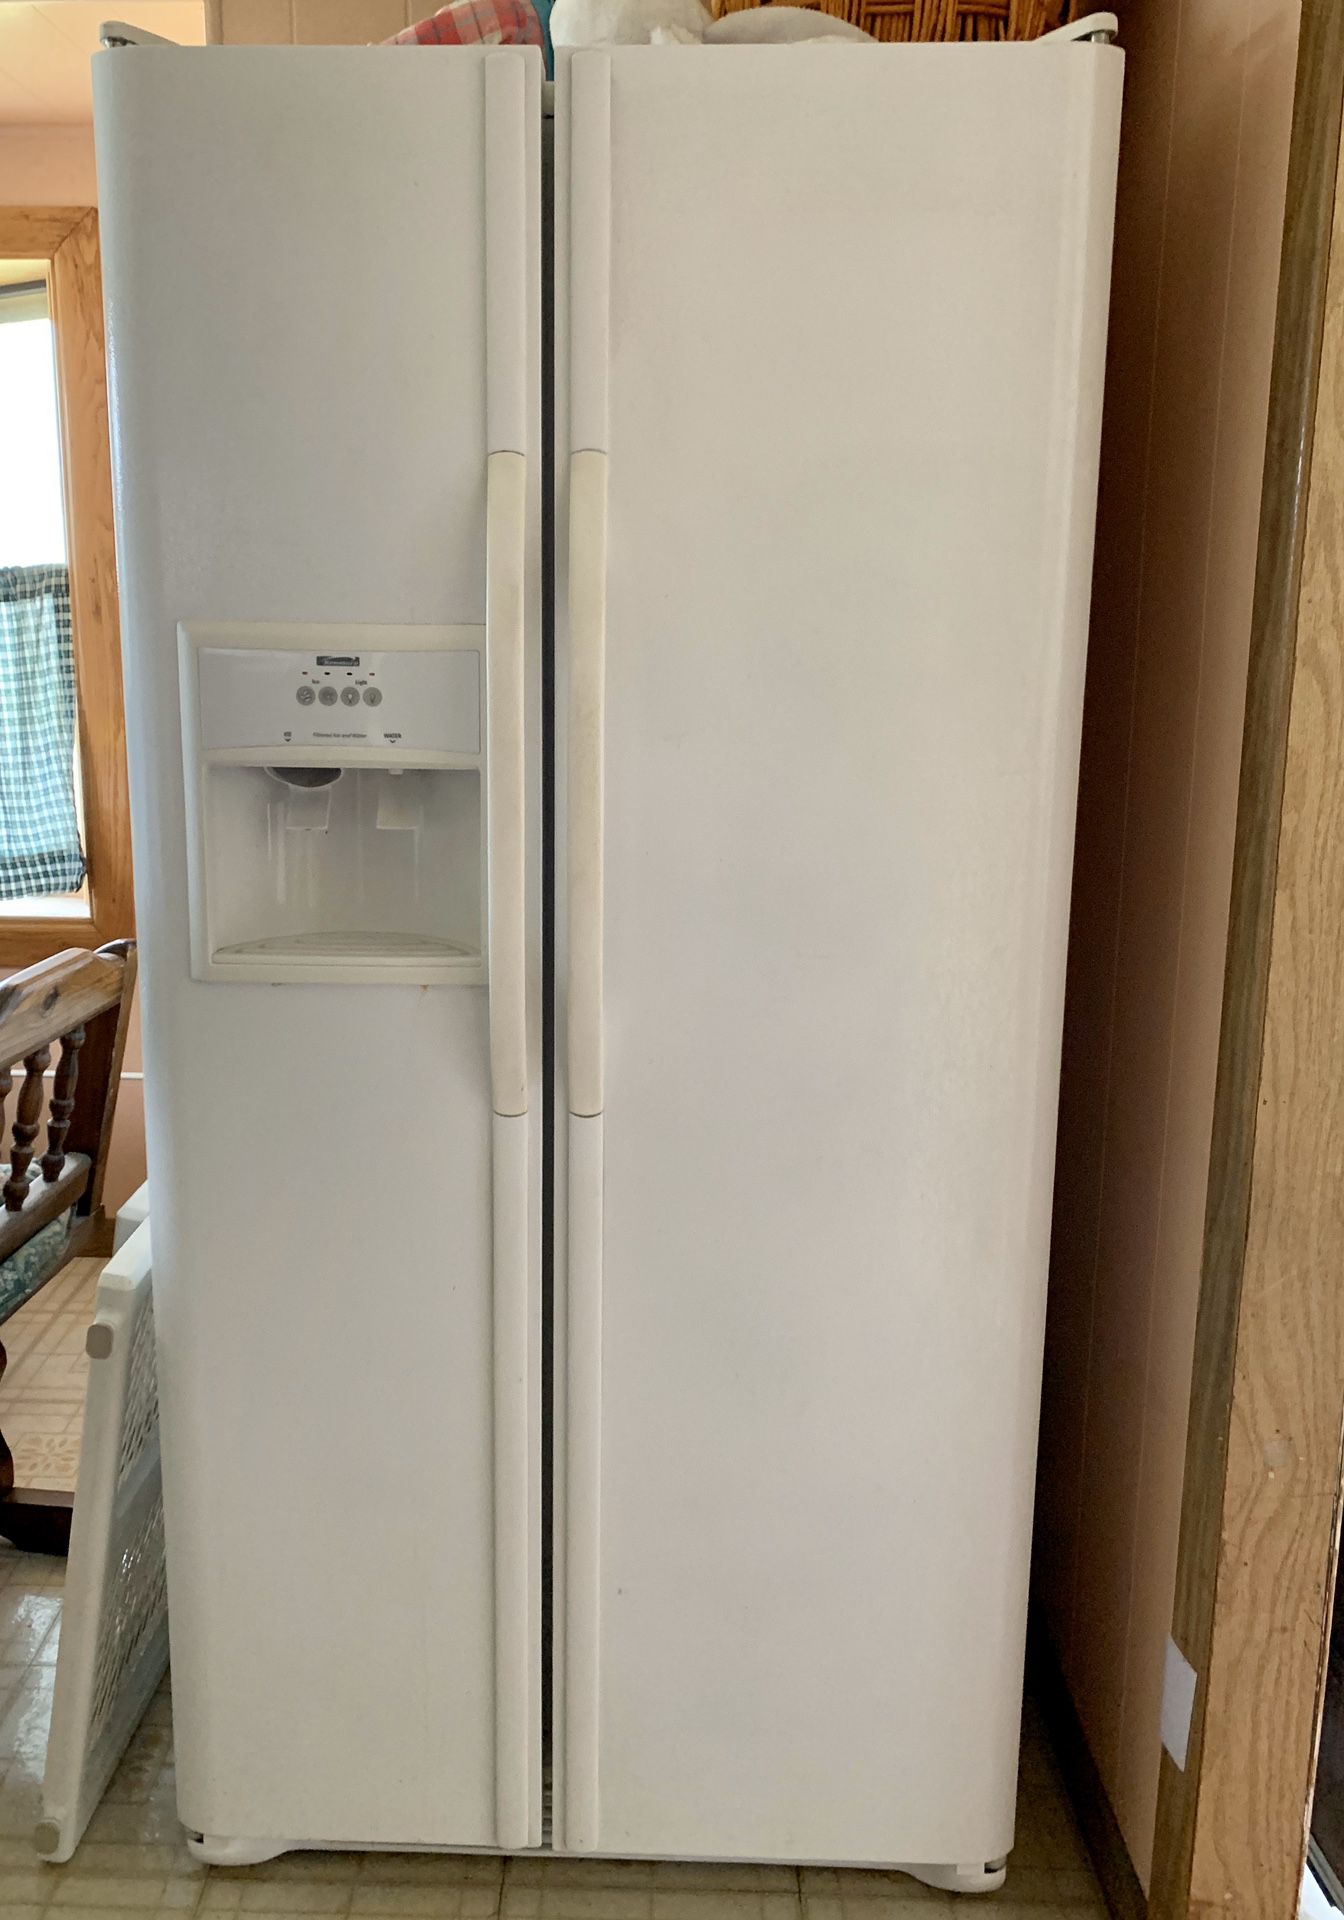 Kenmore fridge/freezer water and ice maker